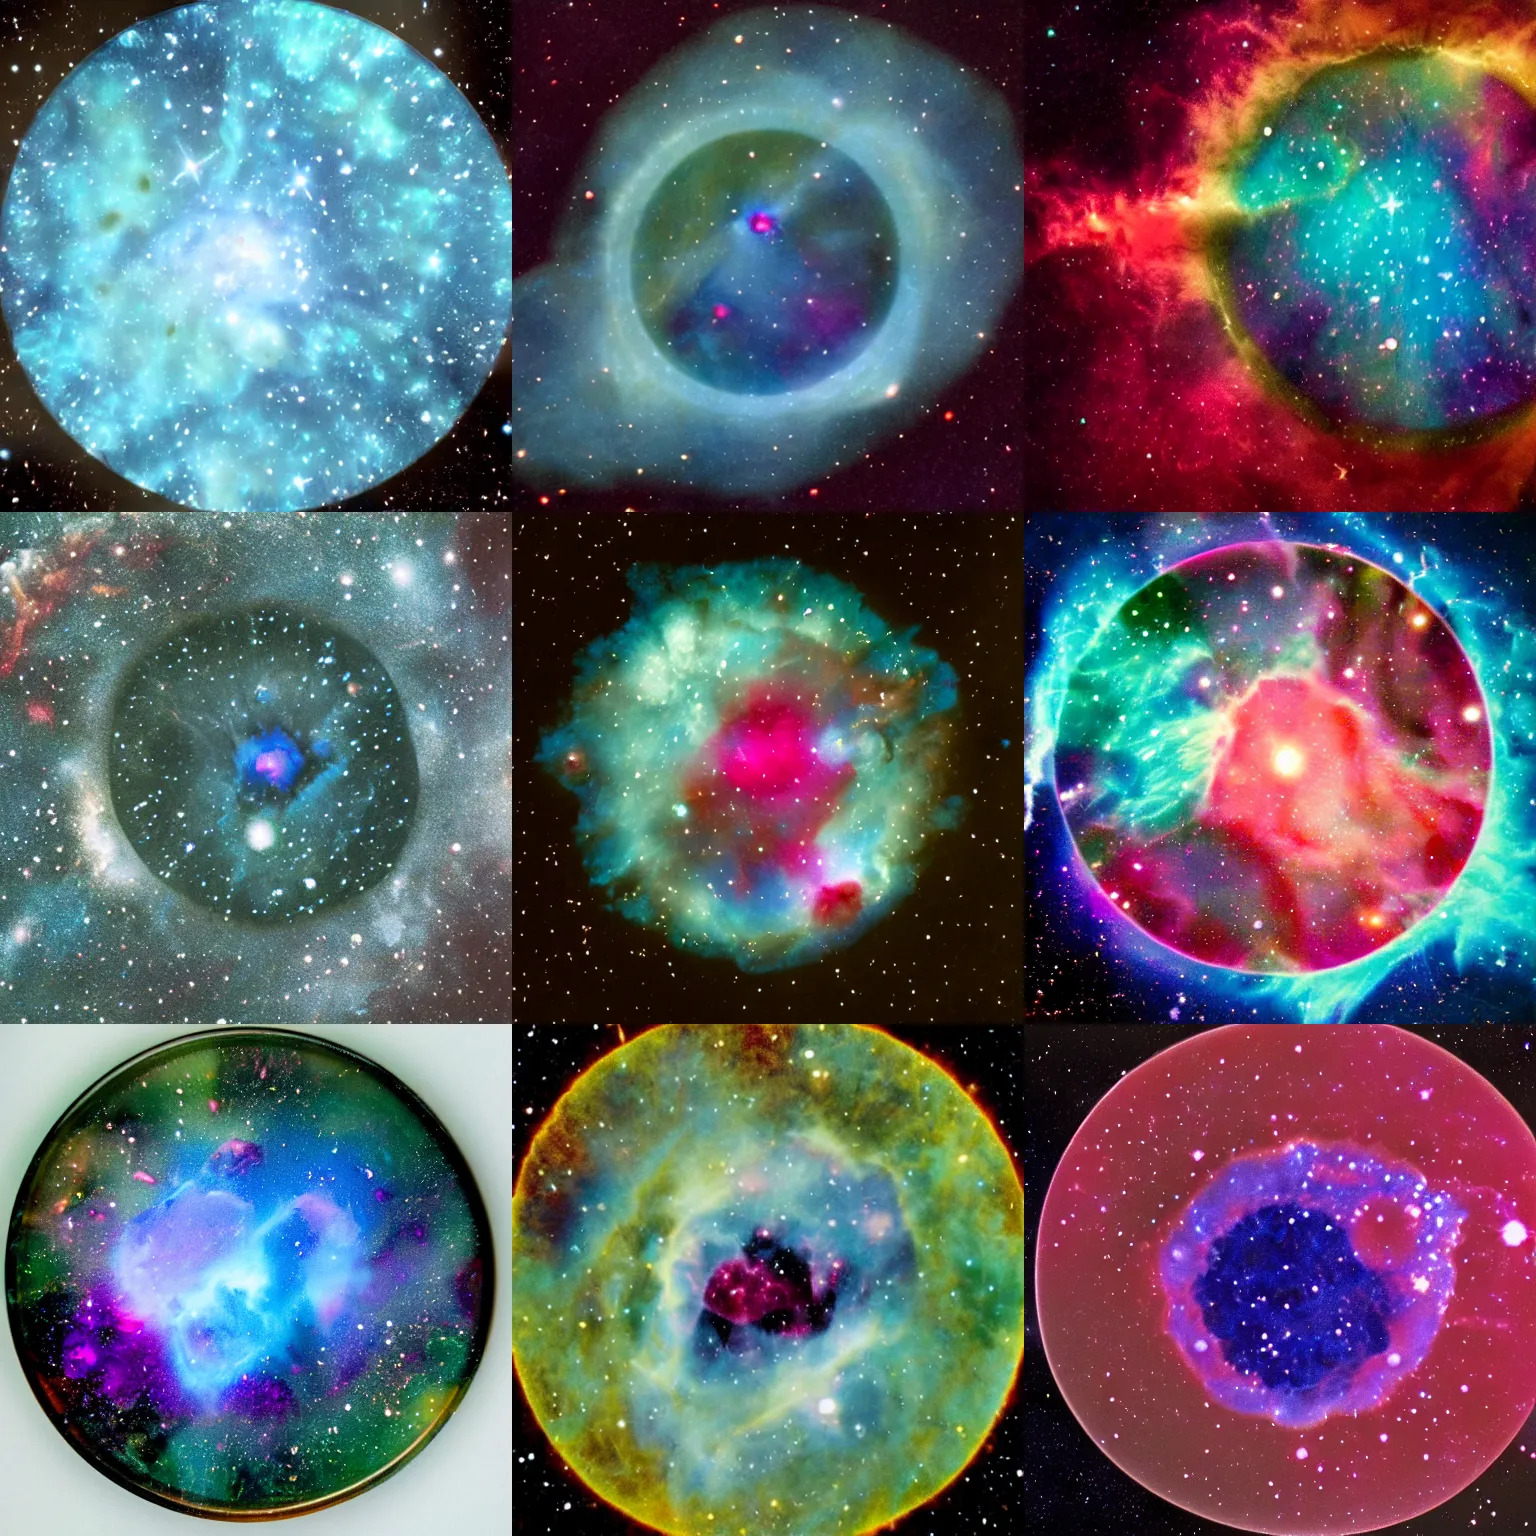 Prompt: a nebula inside a petri dish